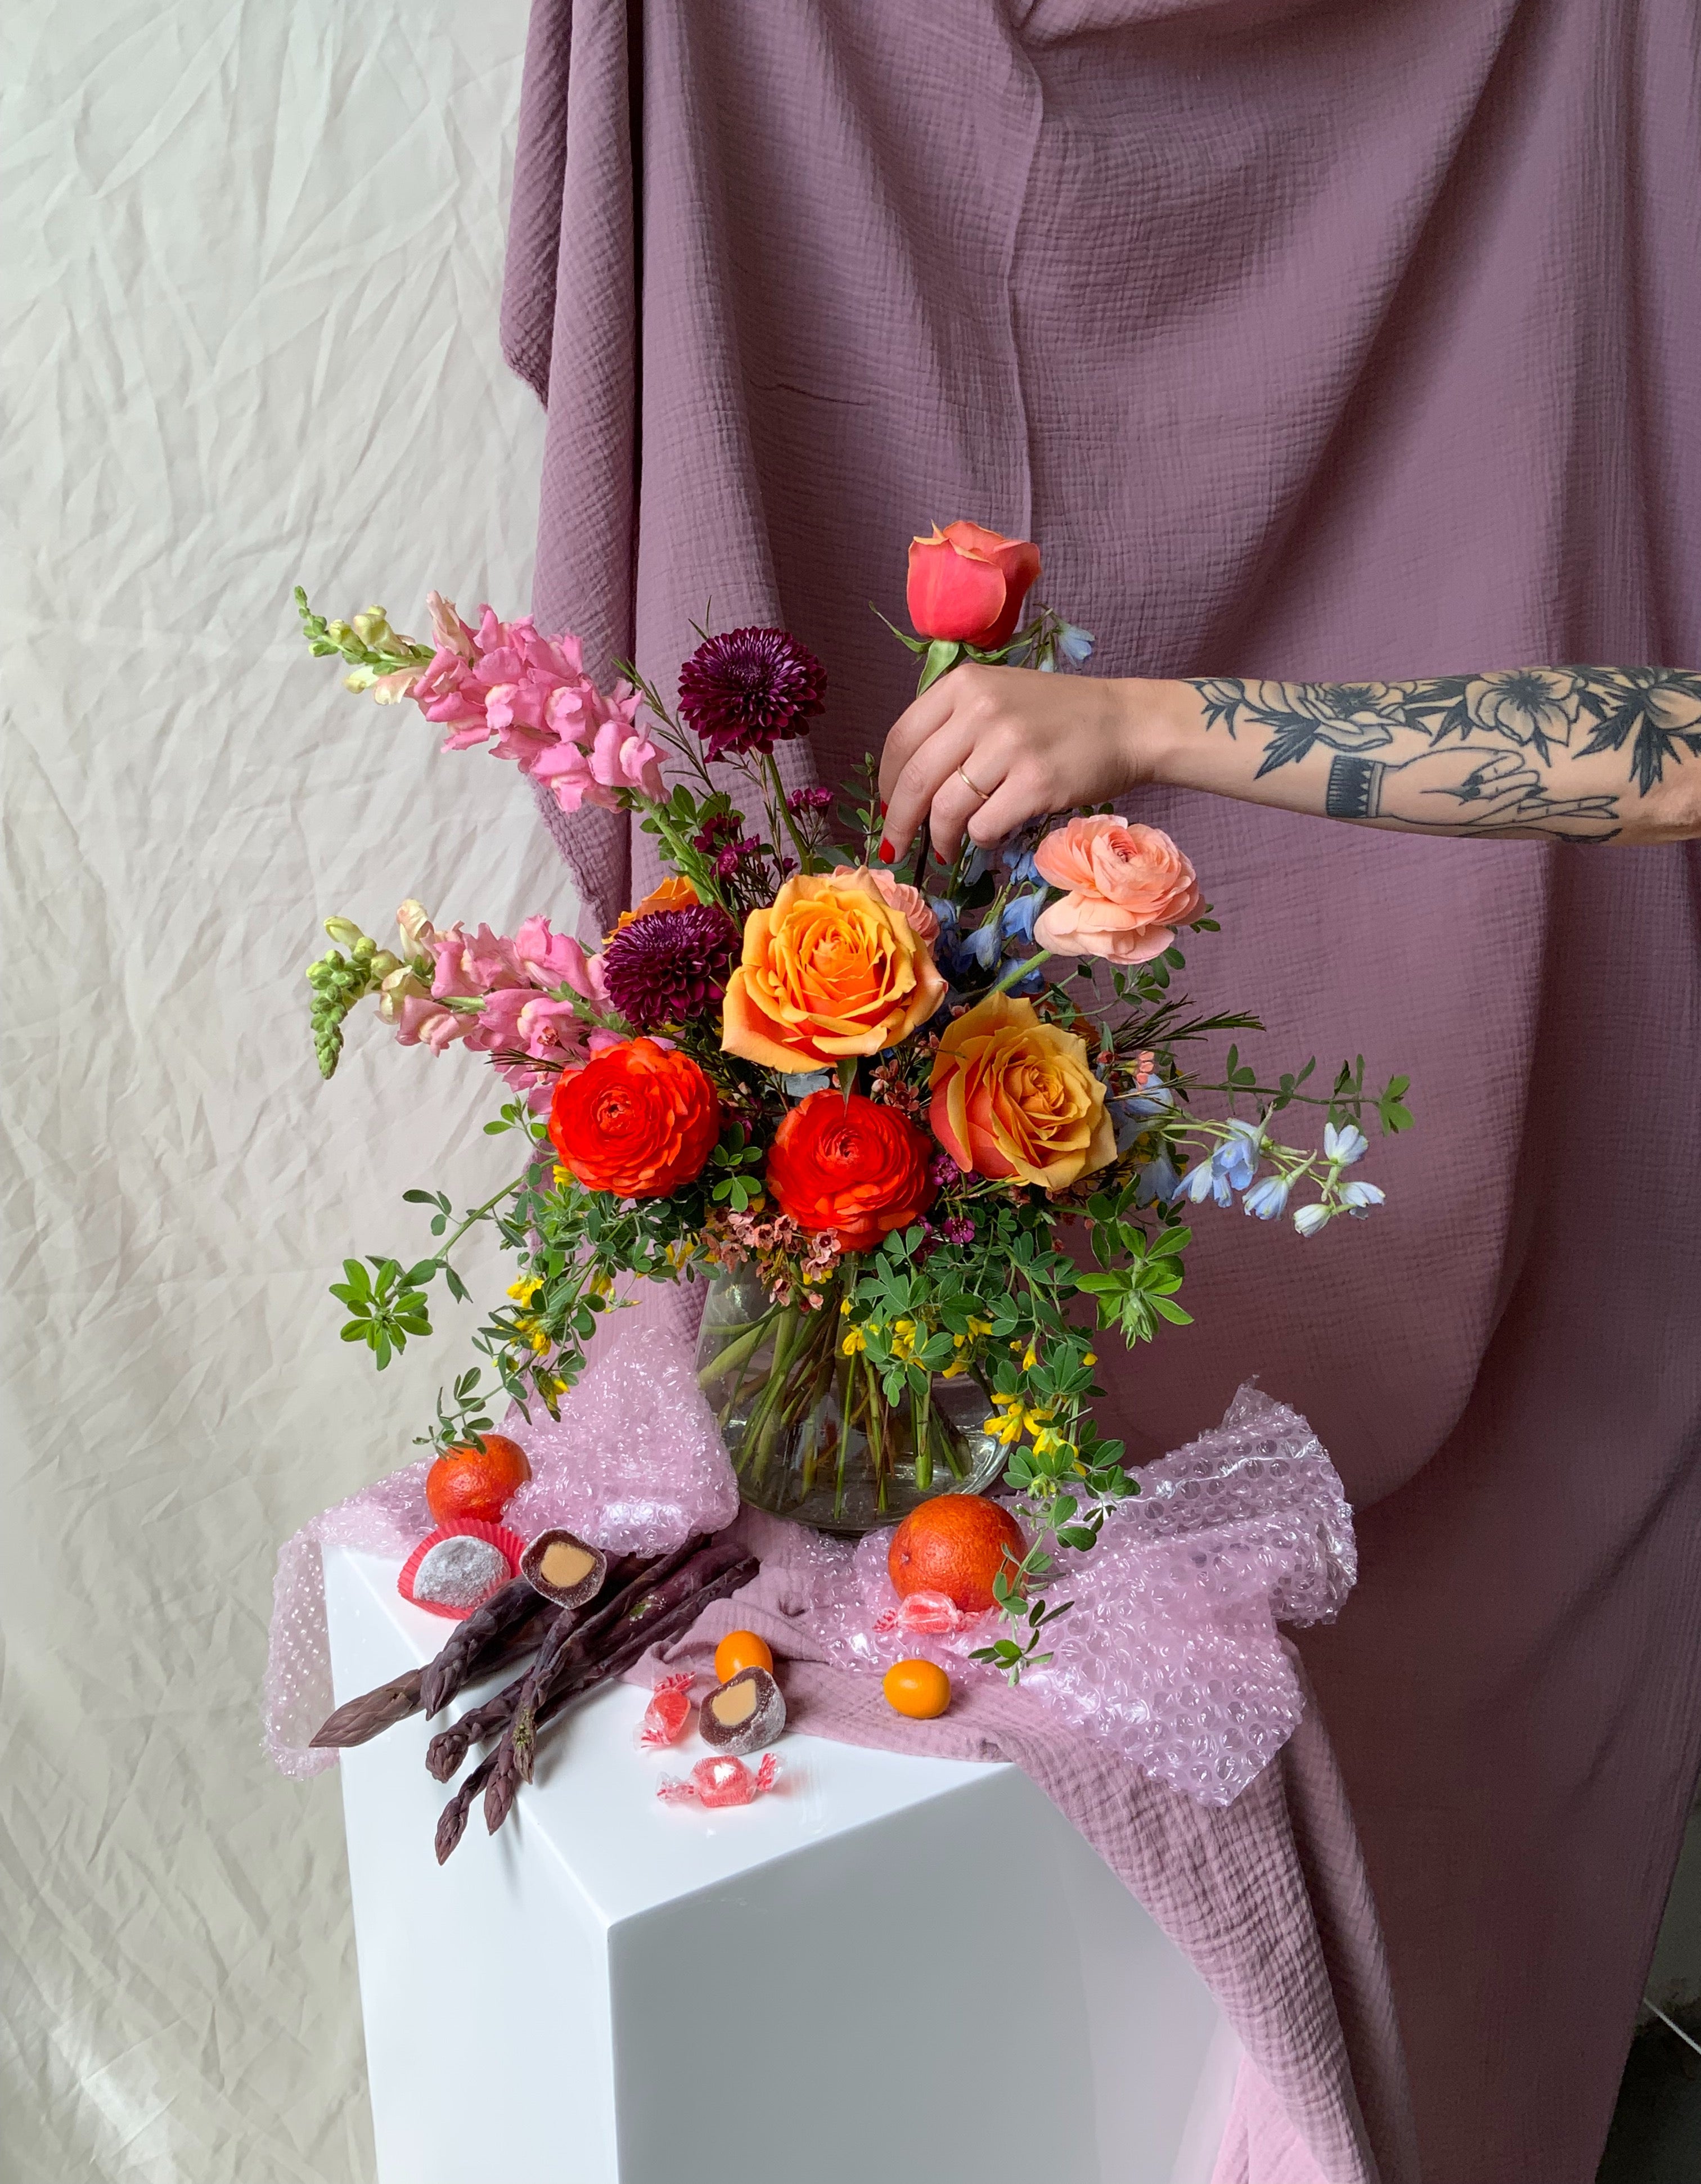 Large Benji vase with lush florals designed by Bagel&